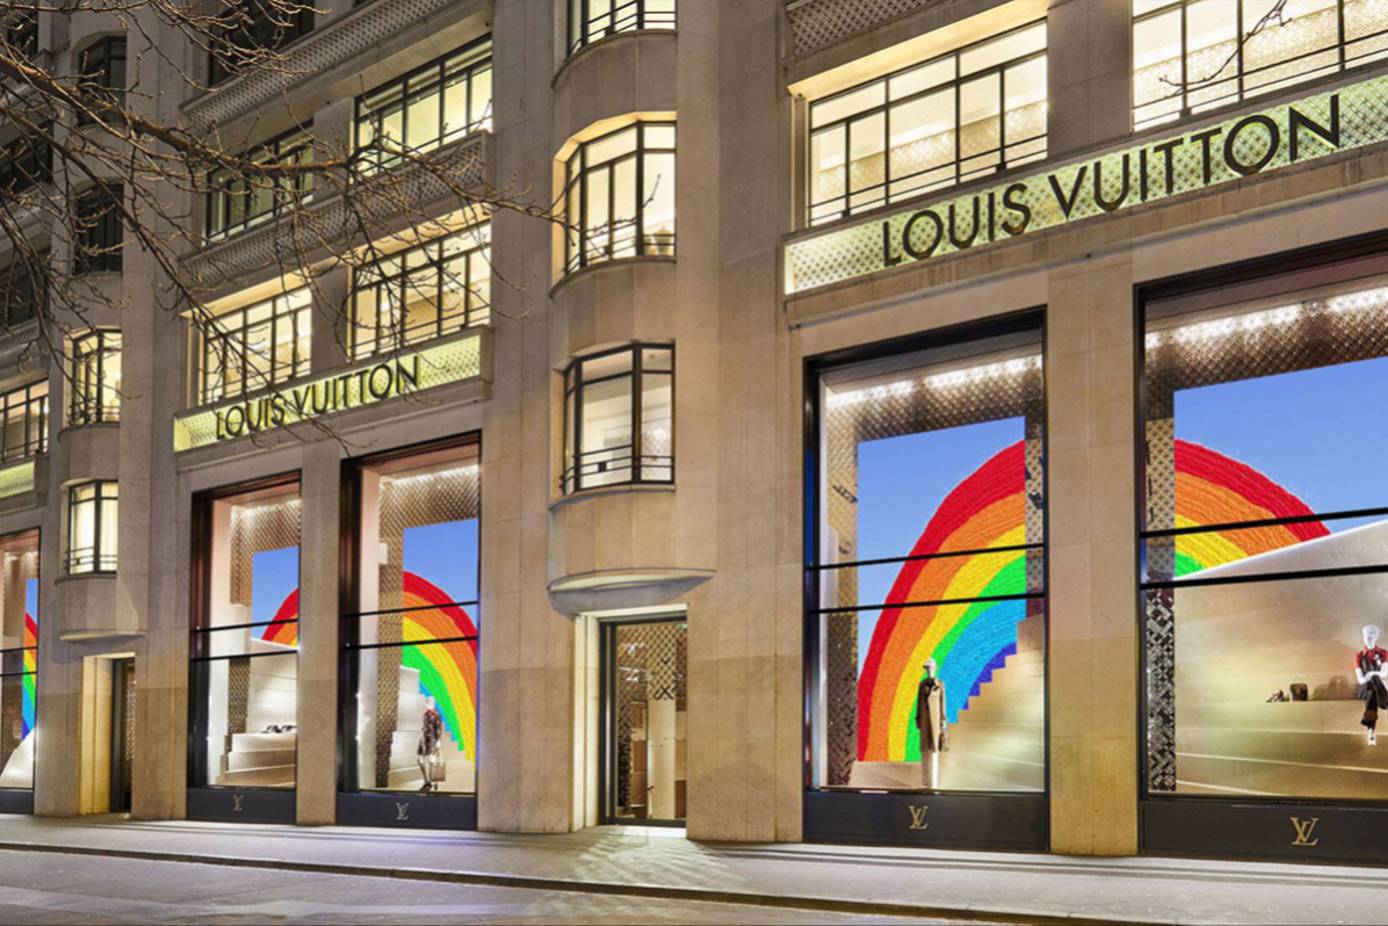 How To Shop At The Louis Vuitton Flagship Store- Paris Champs